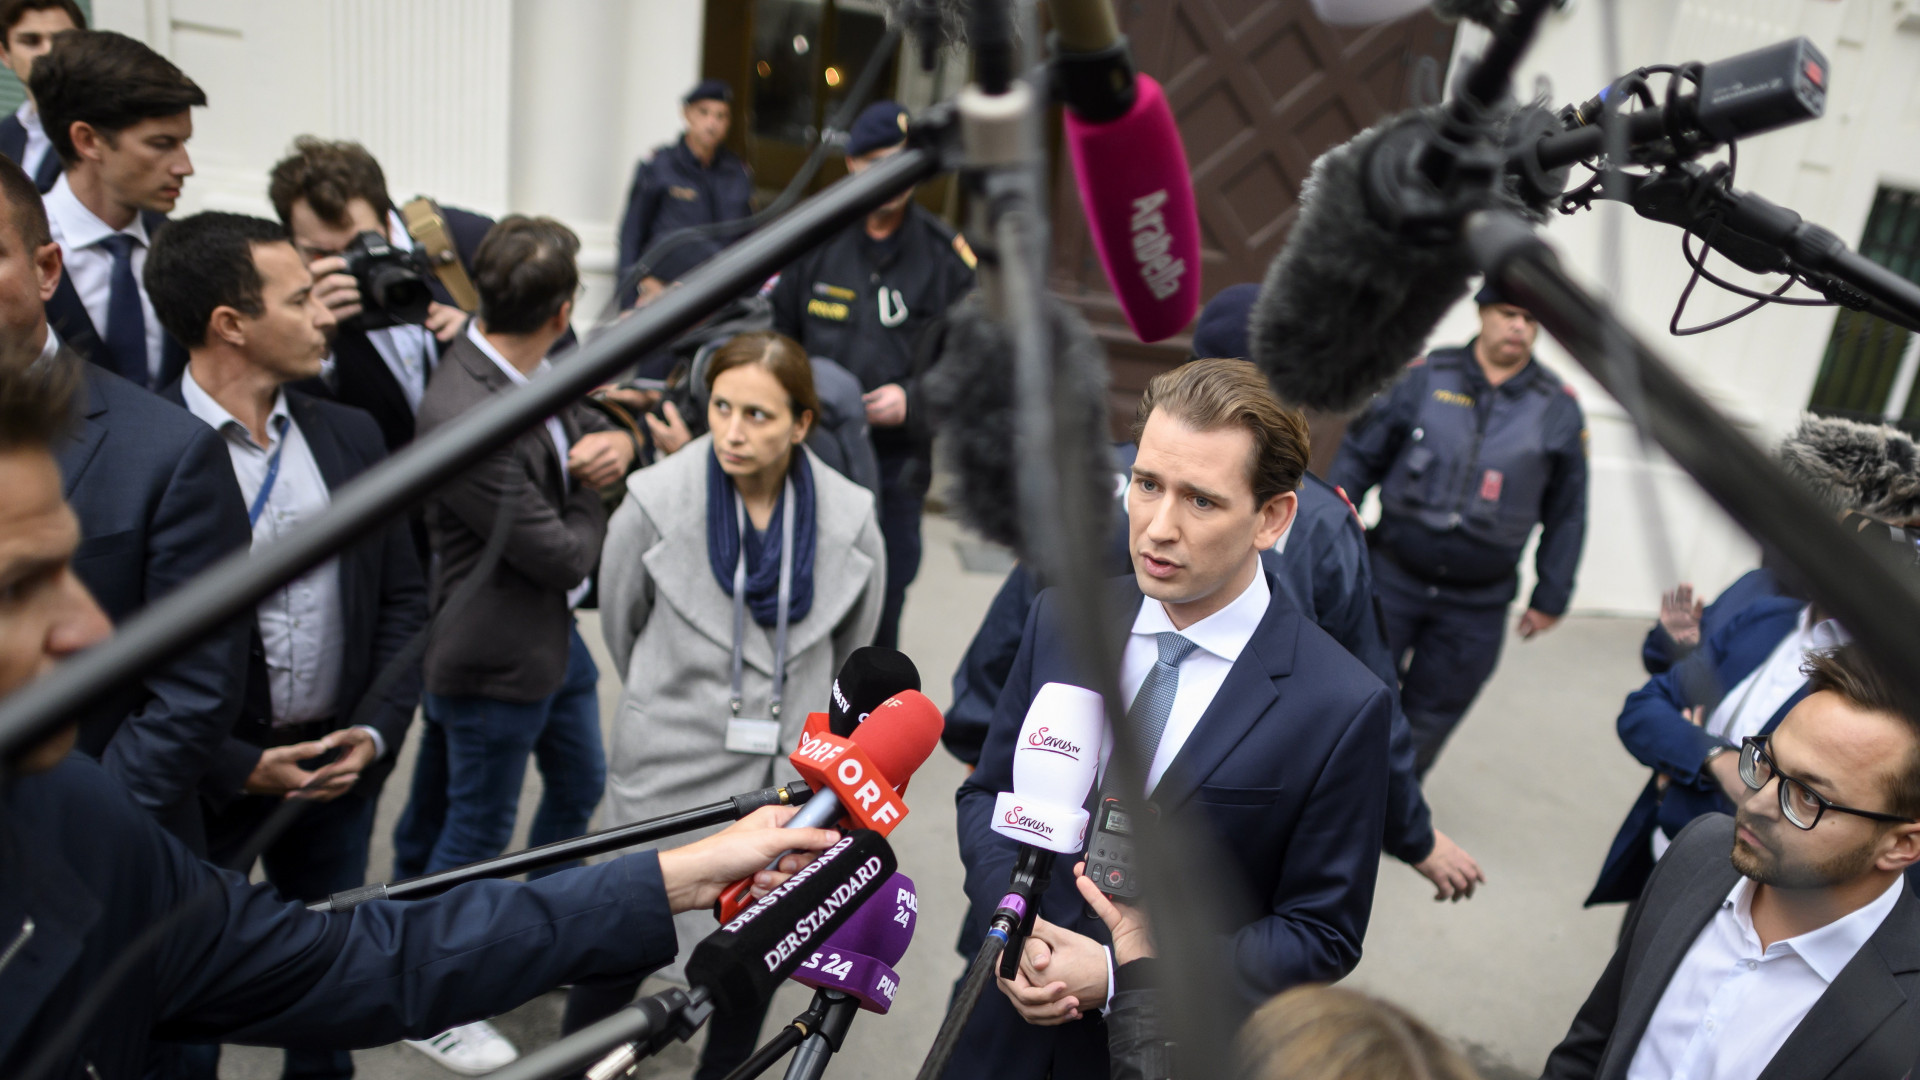 Sebastian Kurz will not resign